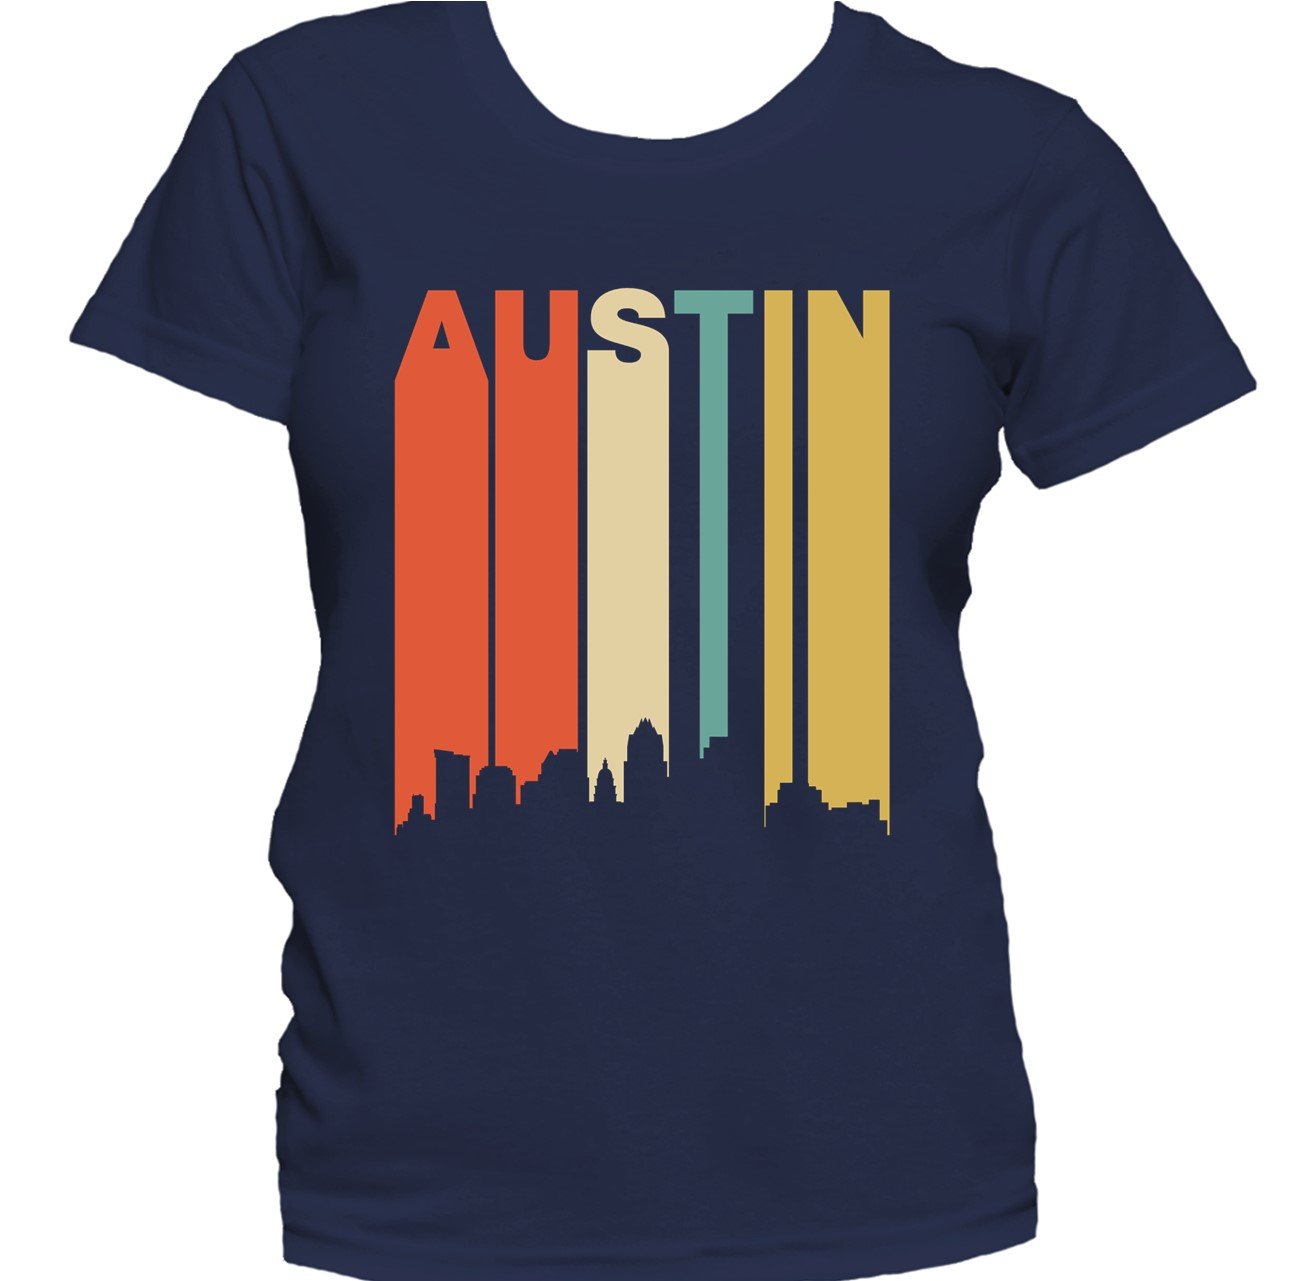 Retro 1970's Style Austin Texas Cityscape Downtown Skyline Women's T-Shirt